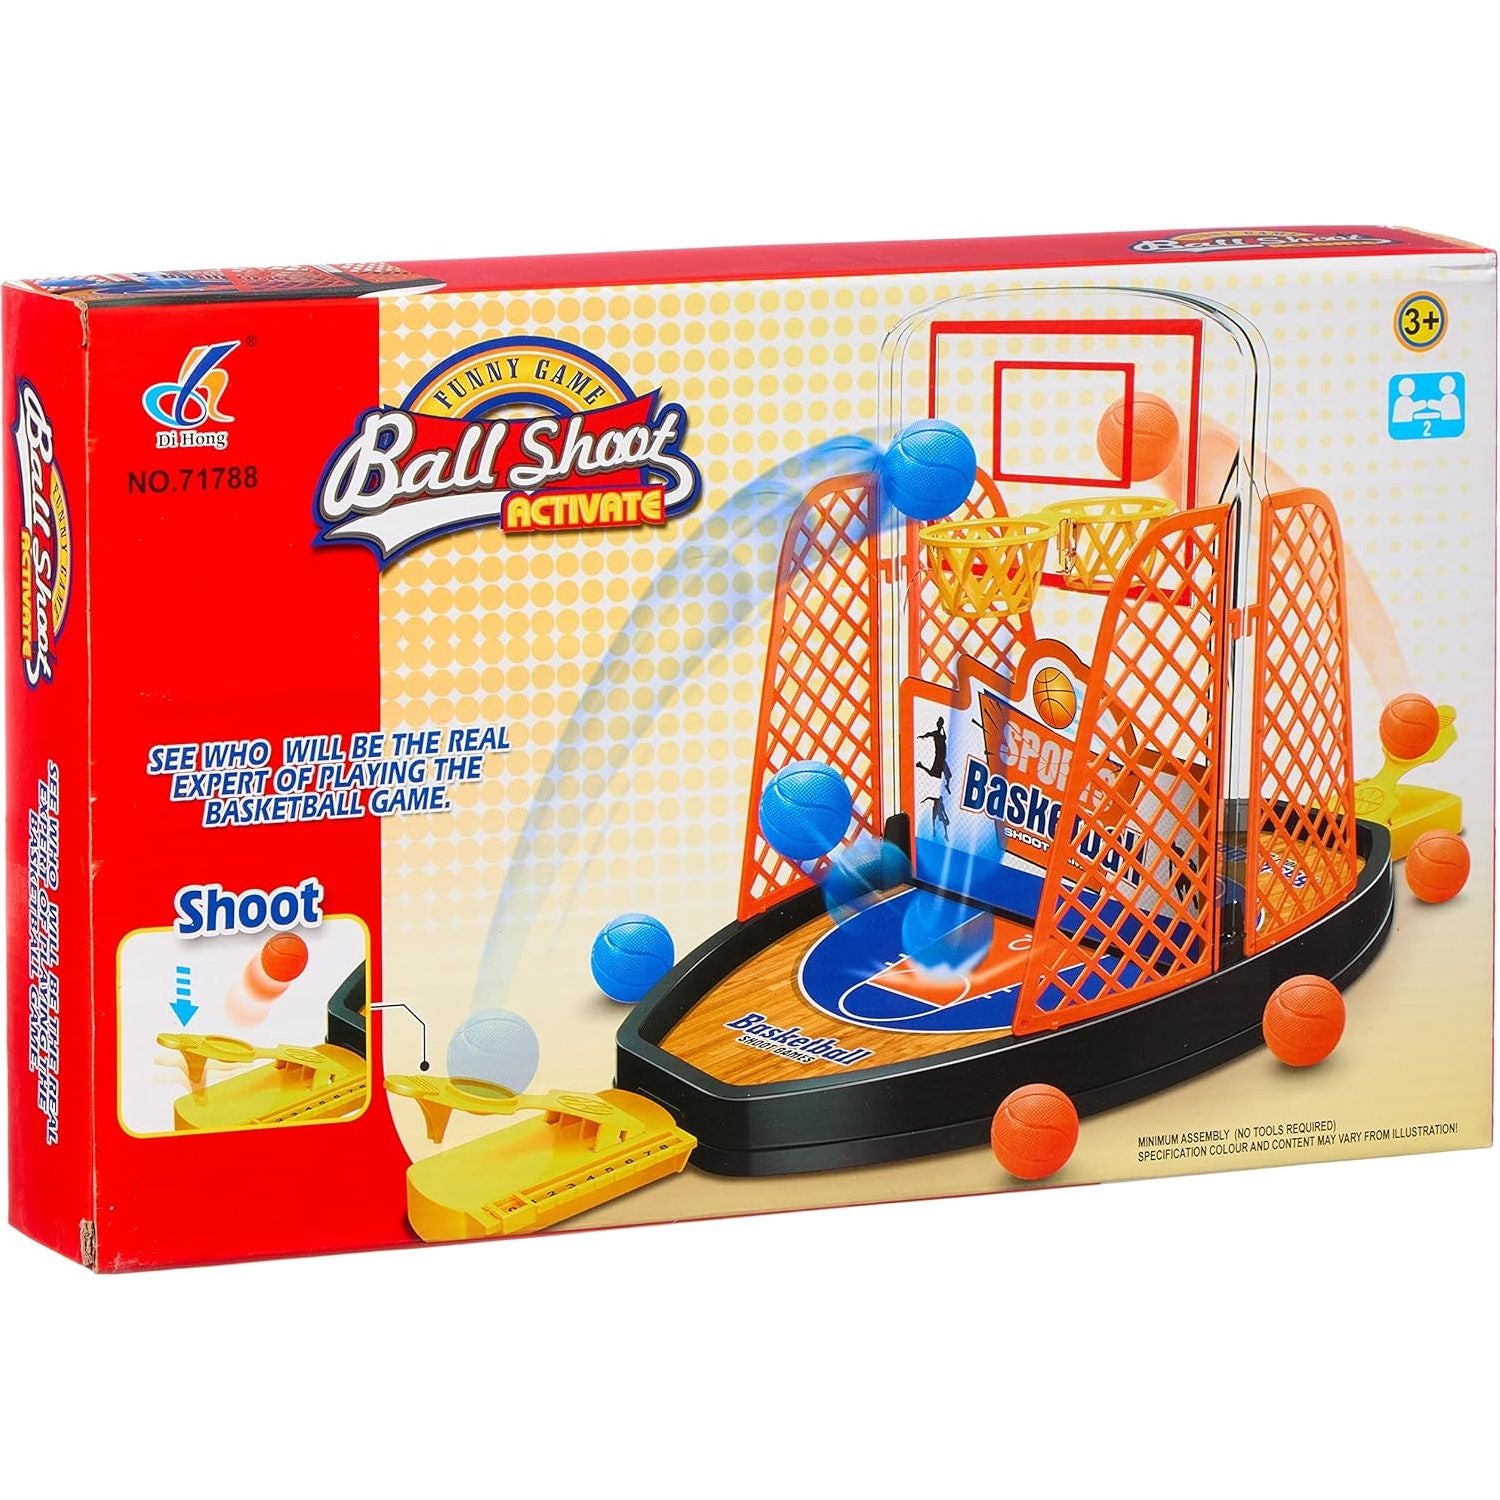 Di Hong Double Basket Ball Shooting Game 71788 - Multi Color